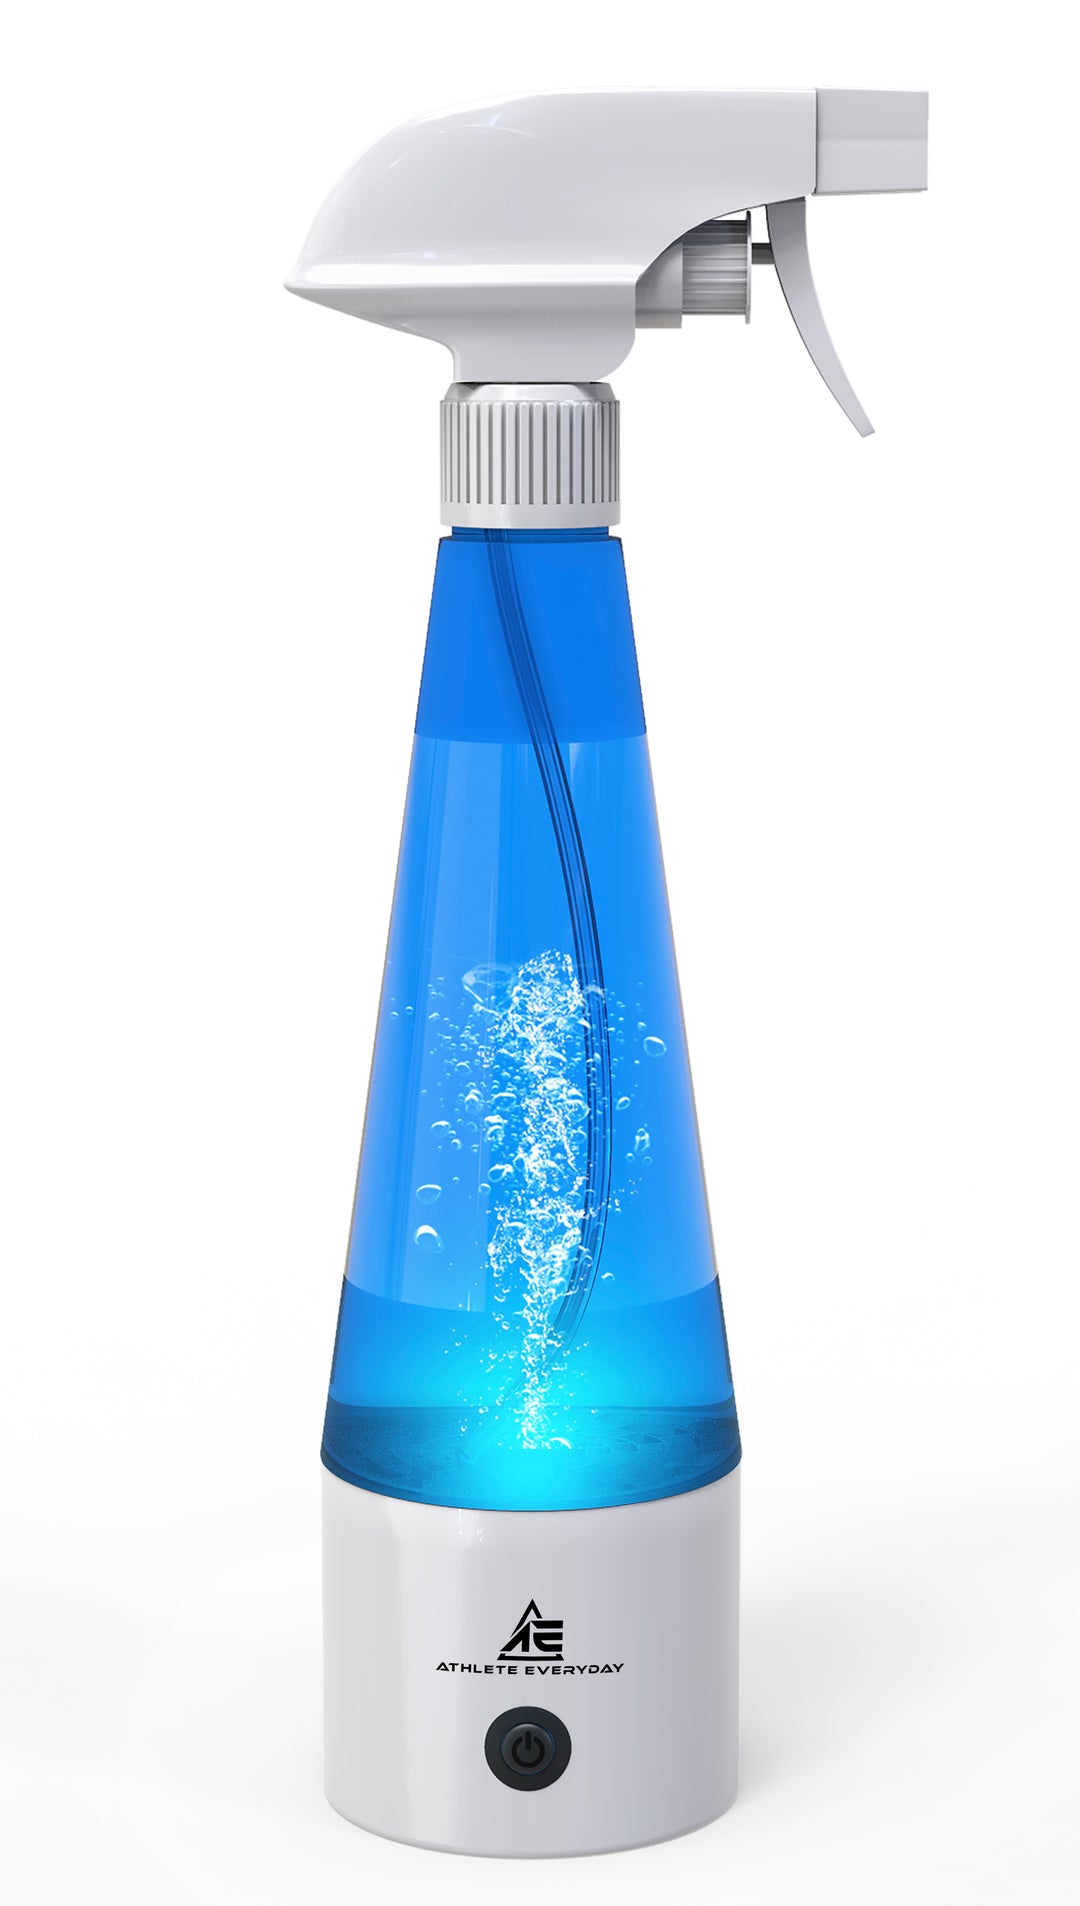 Athlete Everyday Disinfectant Spray Generator - Athlete Everyday